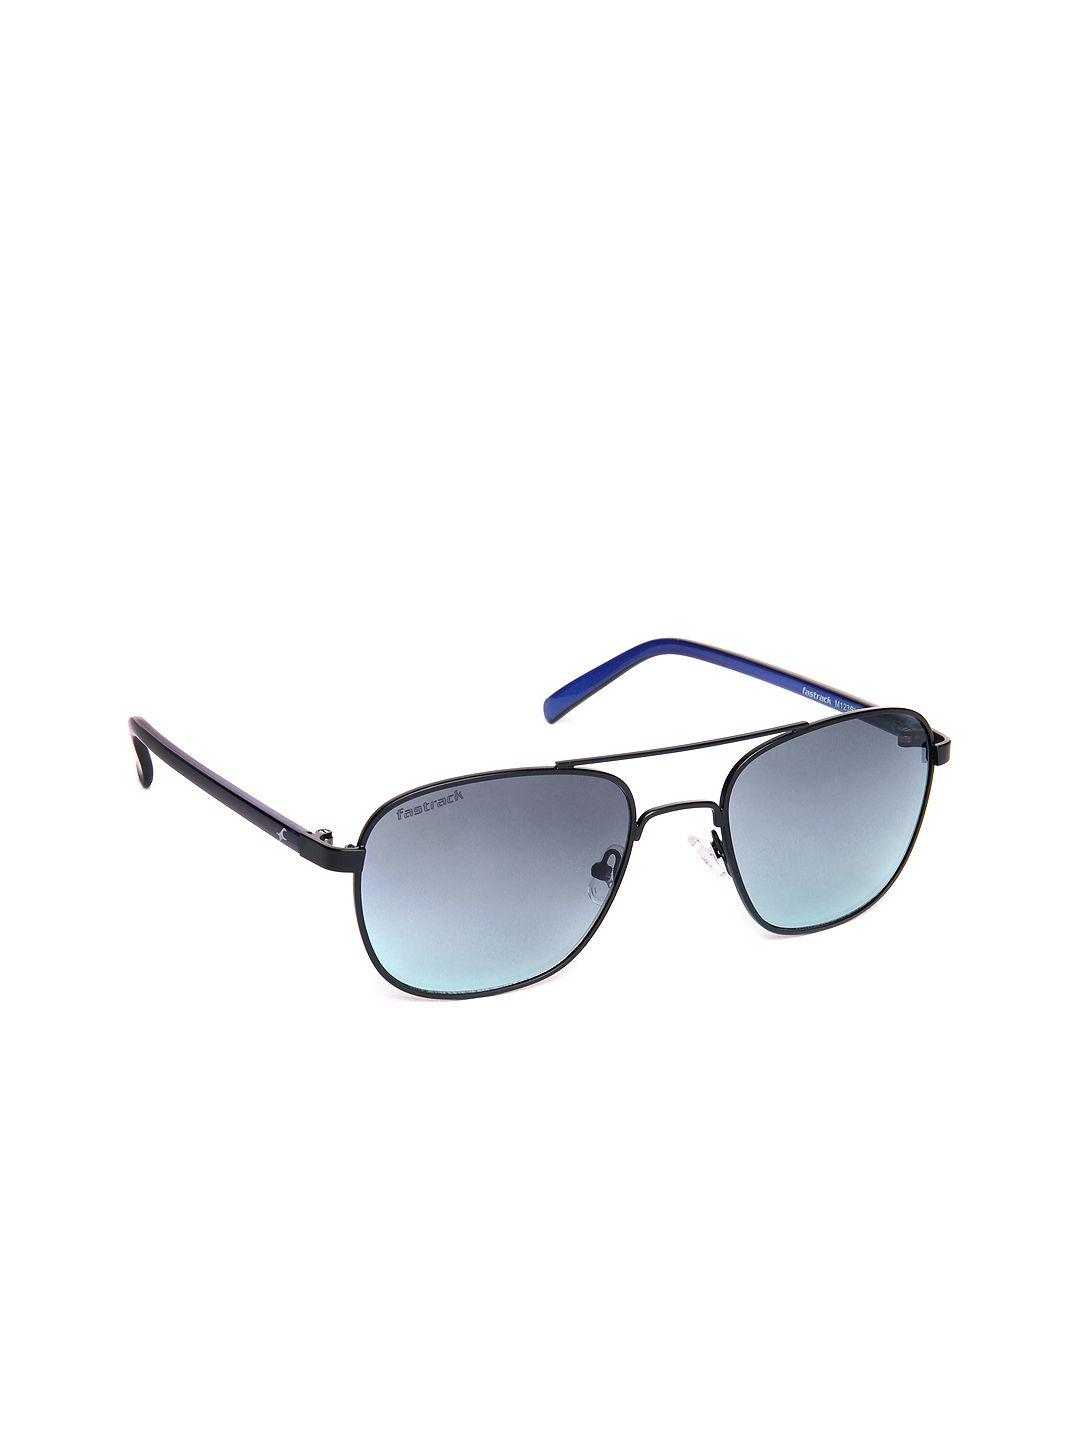 fastrack-men-sunglasses-m123bu1